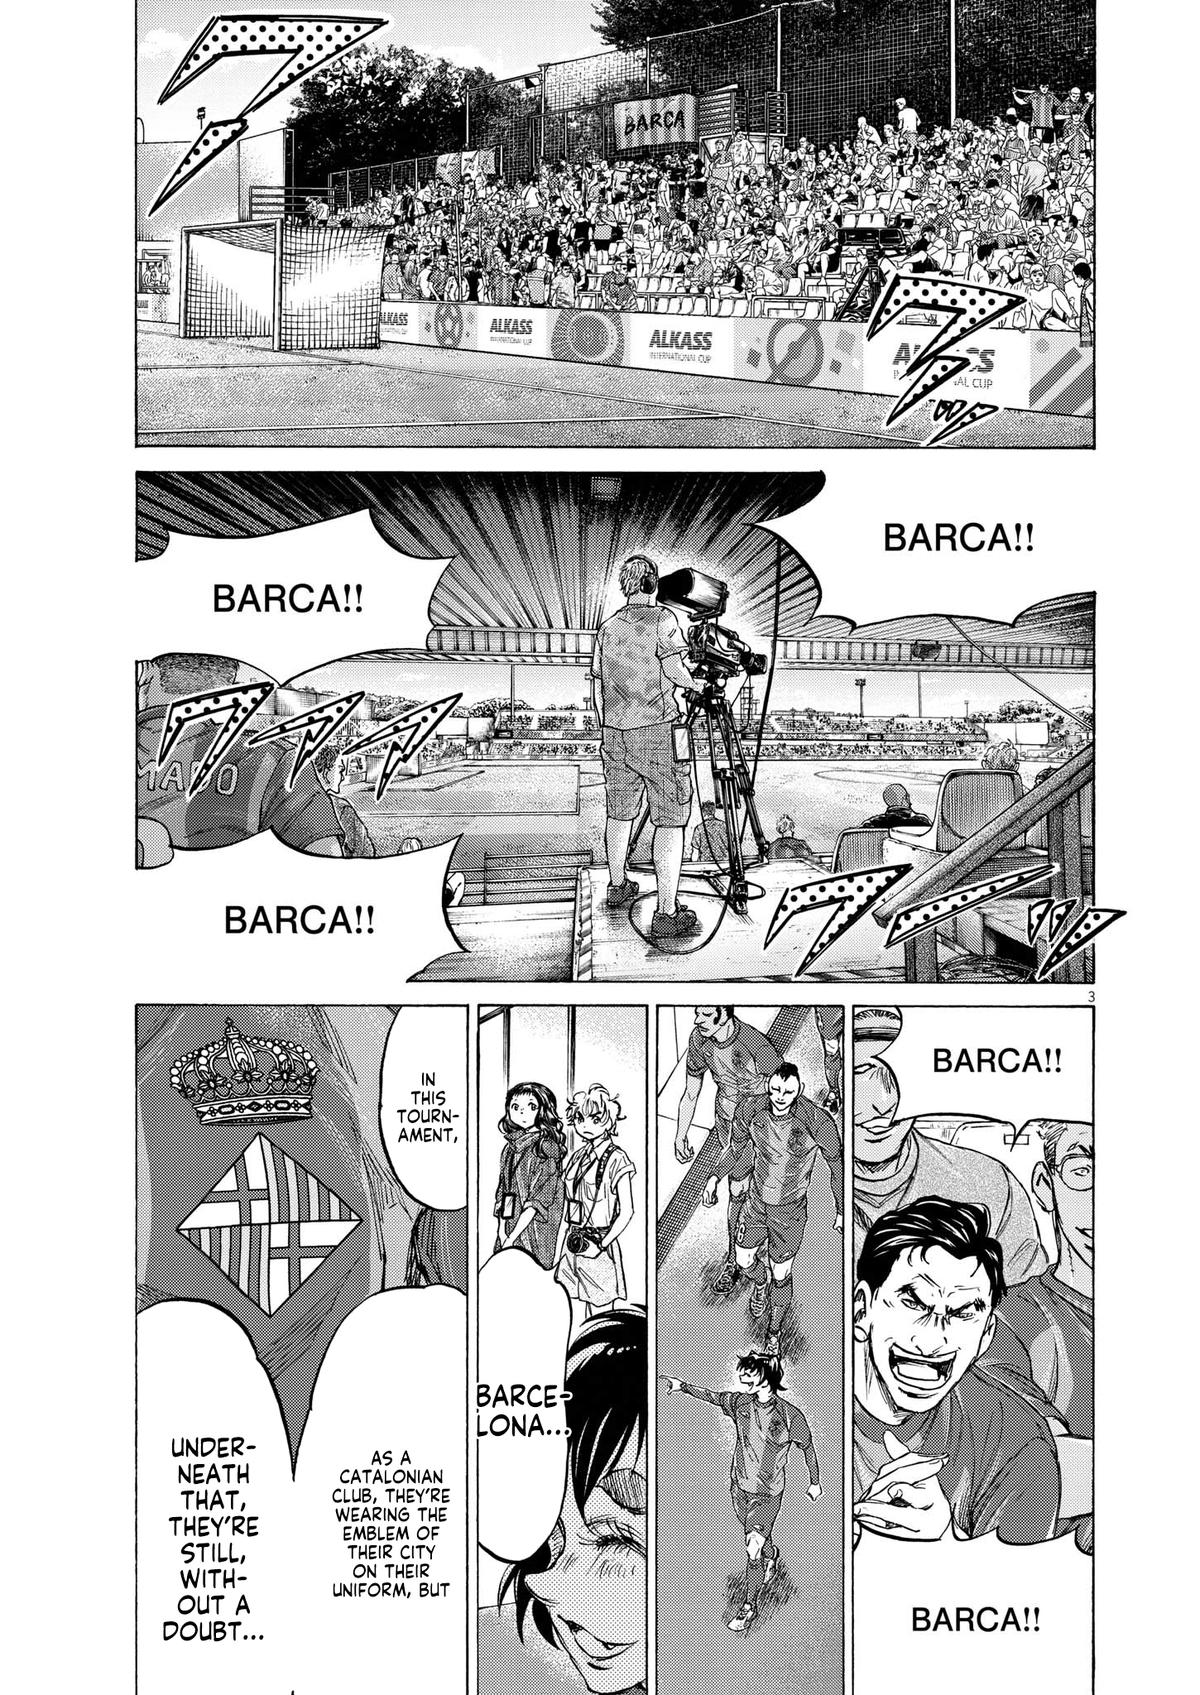 Ao Ashi, Chapter 351  TcbScans Net - TCBscans - Free Manga Online